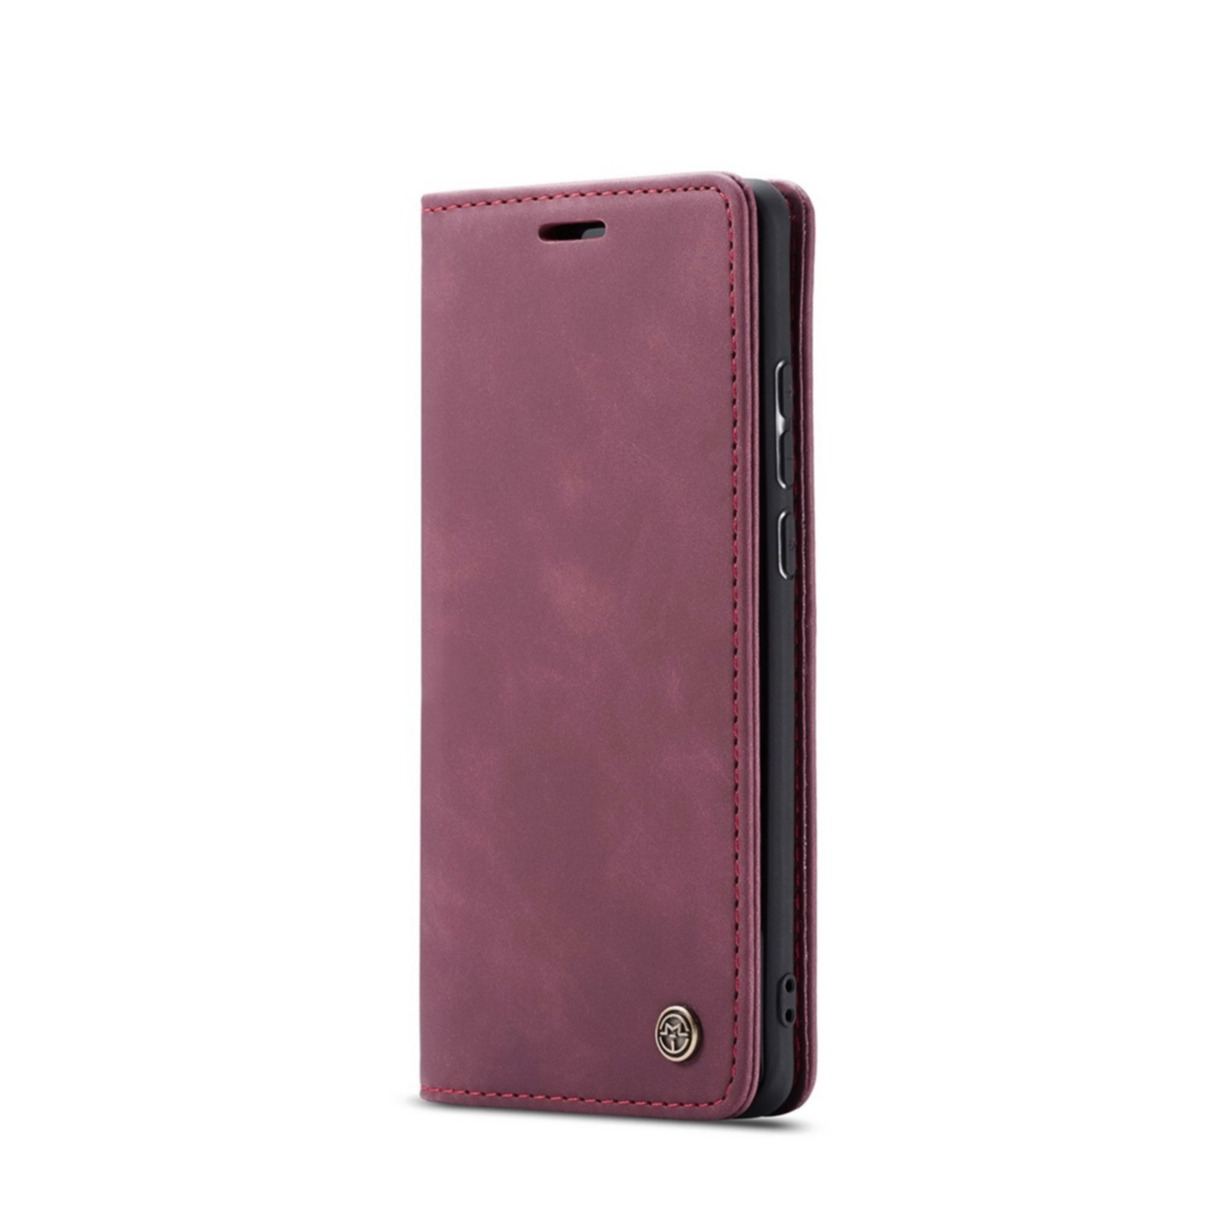 Image of Caseme - Huawei P30 Leder Tasche Flip Wallet Etui mit Kartenfächern - Dunkelrot bei Apfelkiste.ch